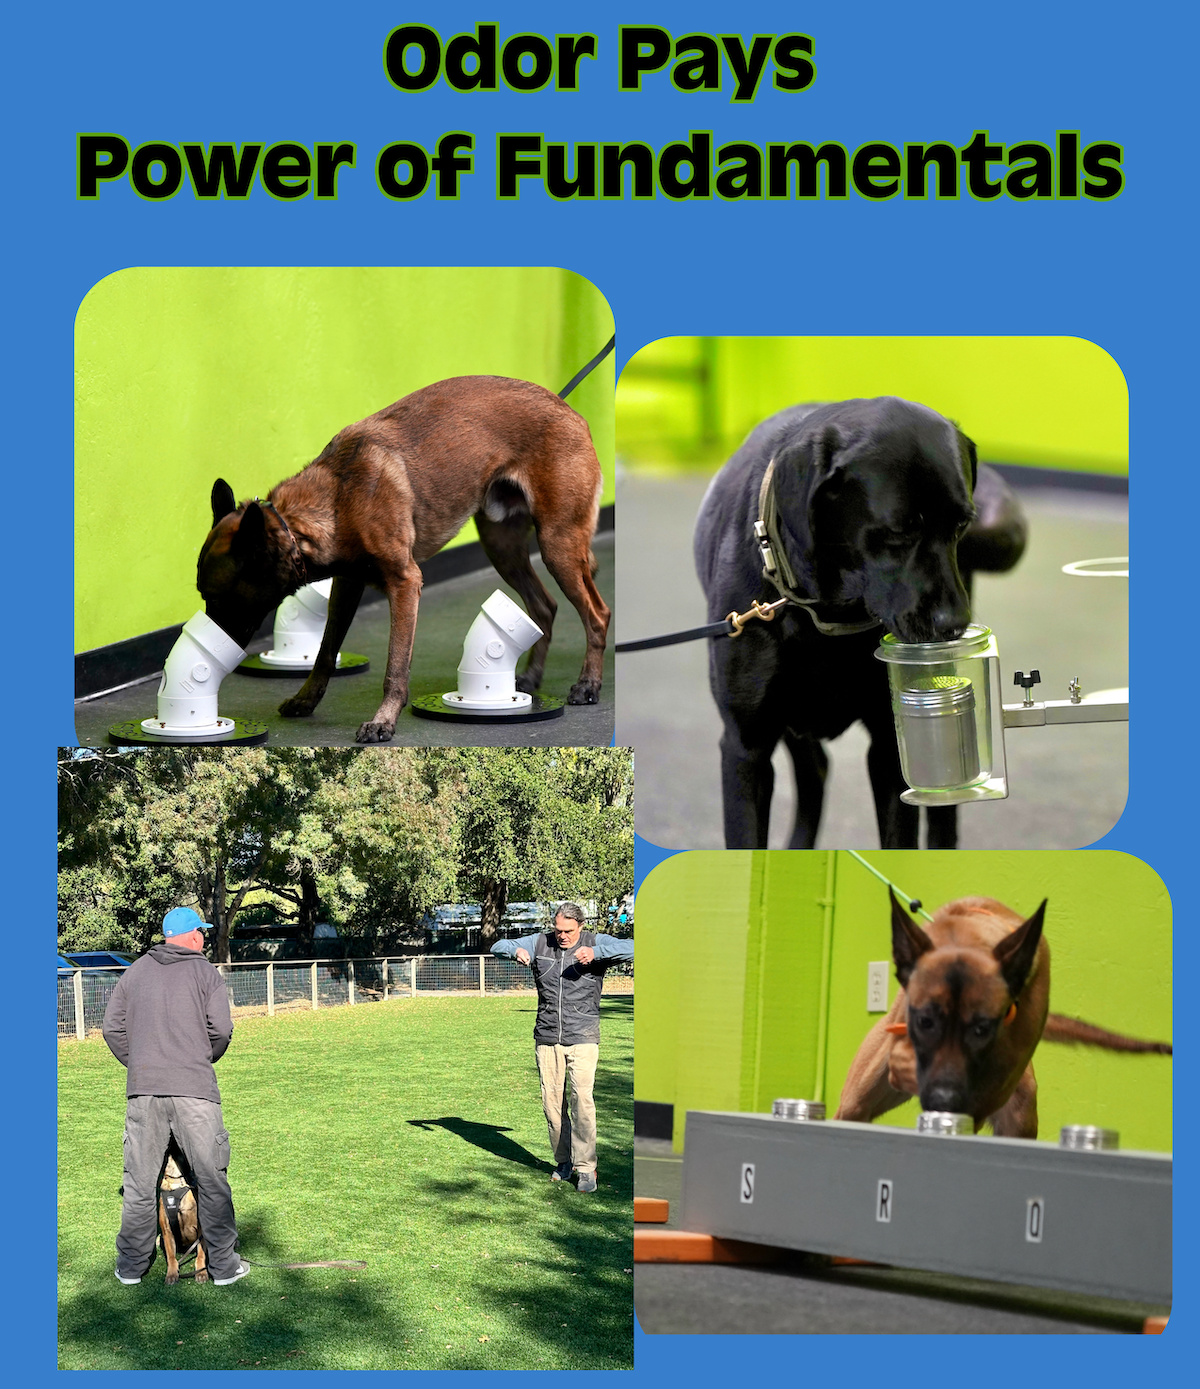 Power of fundamentals (1)